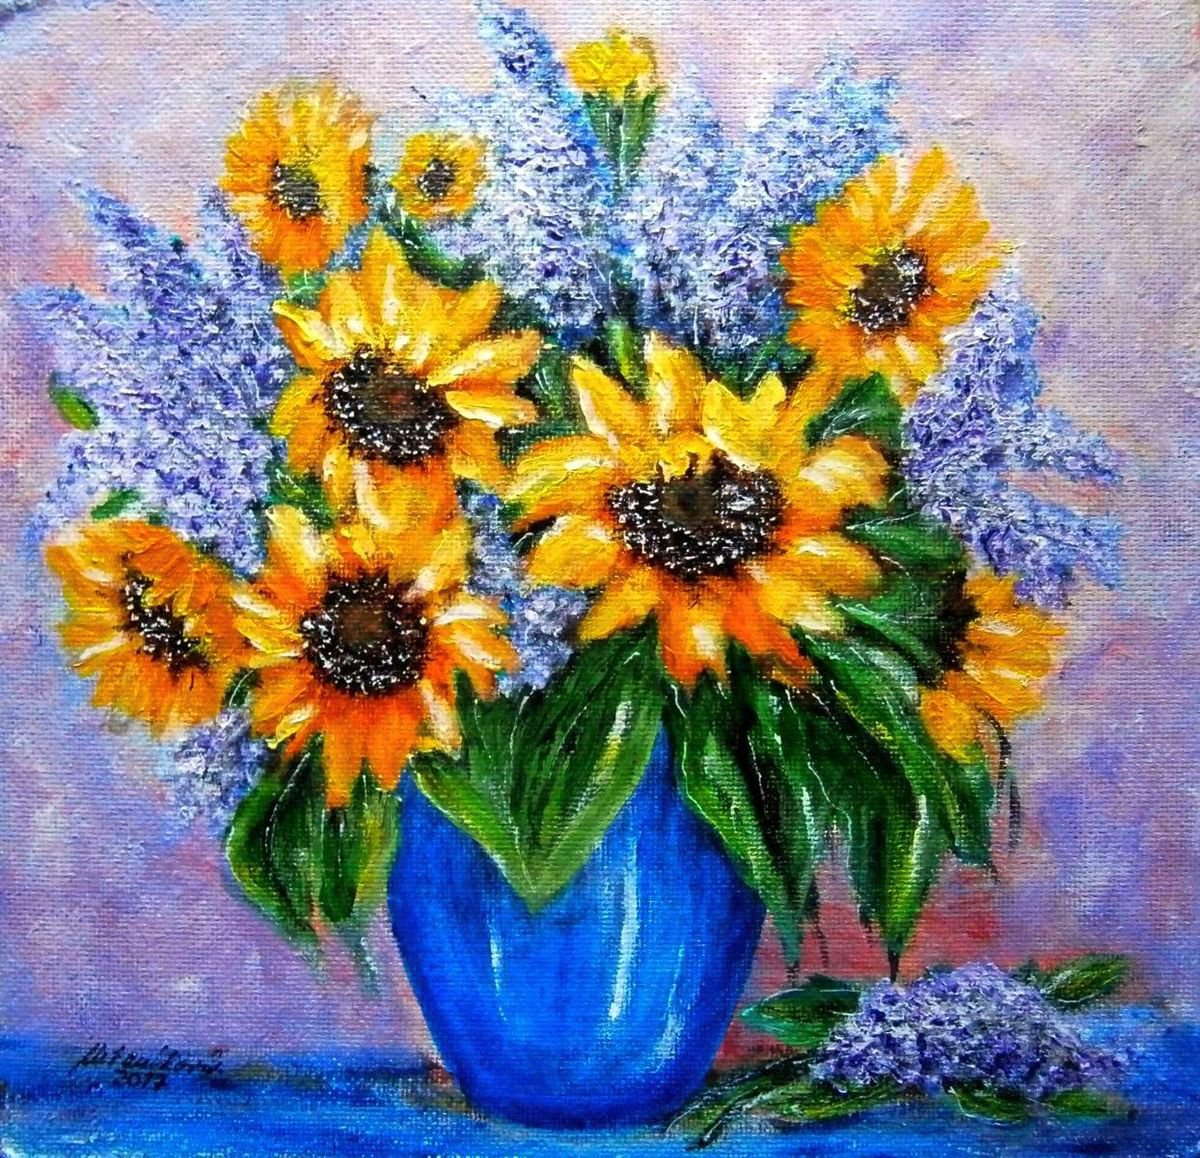 Still life with sunflowers by Em�lia Urban�kov�